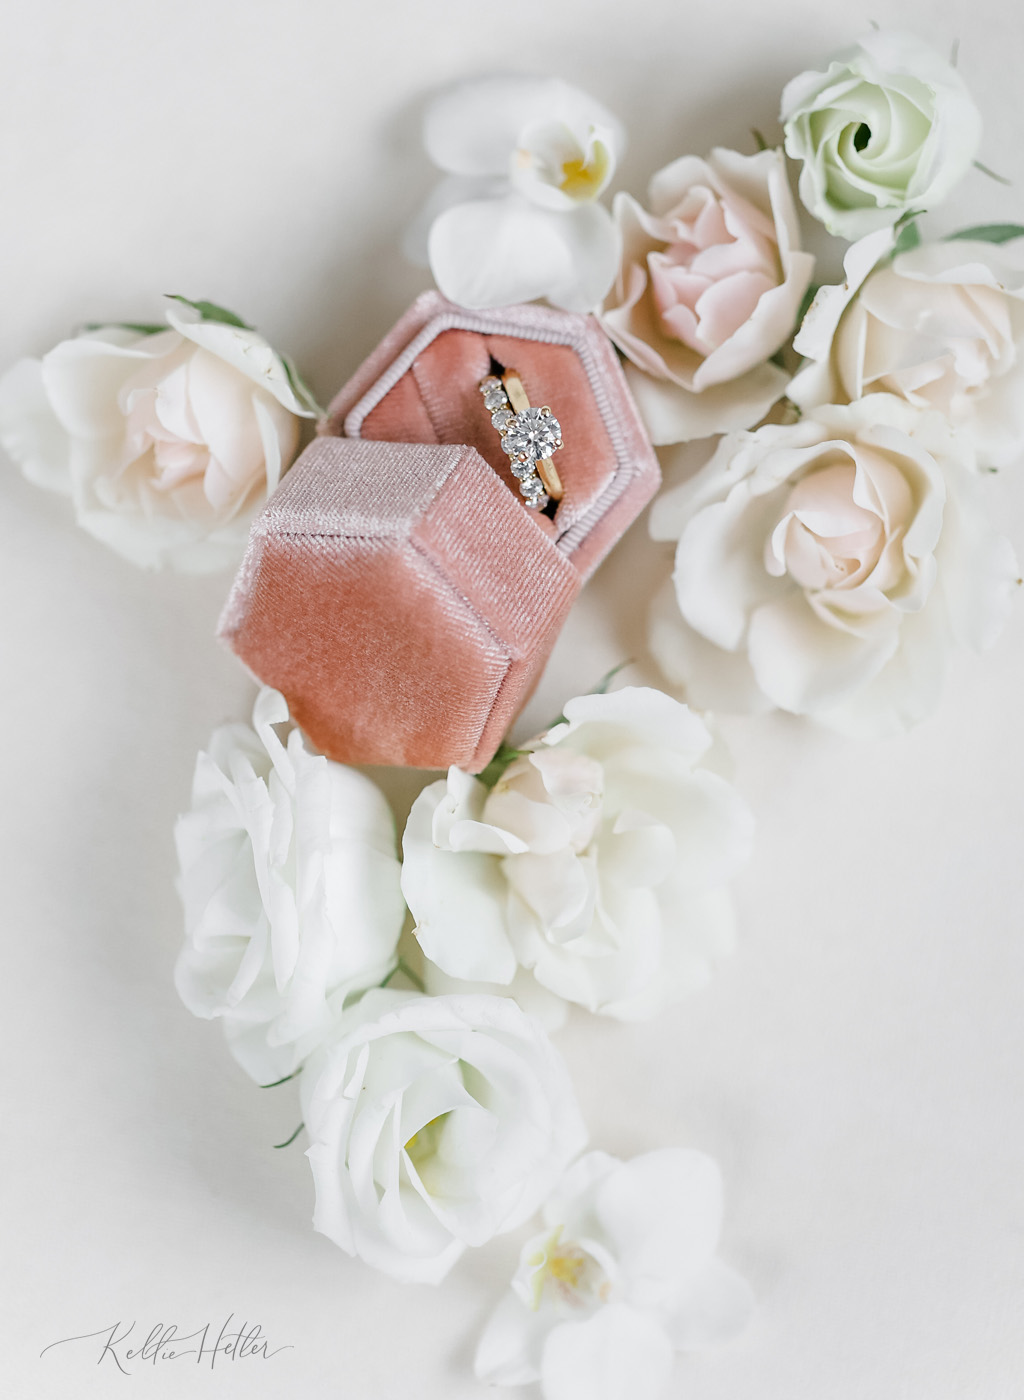 Wedding rings sitting in velvet ring box surrounded by flowers